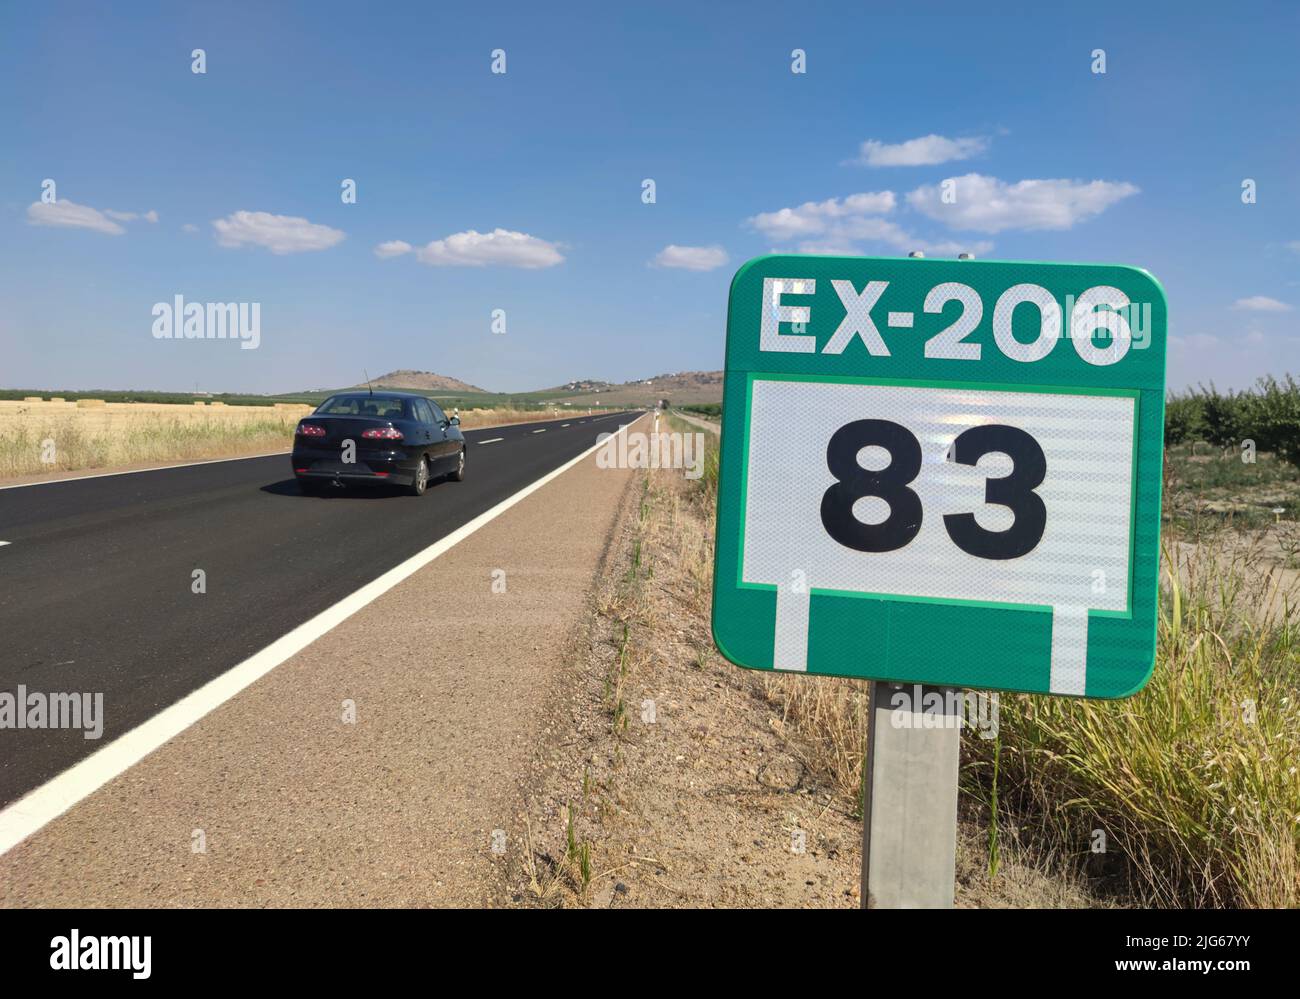 CARRETERA DE la EX-303. Carretera interregional que se extiende desde Cáceres hasta Villanueva de la Serena, Extremadura, España Foto de stock